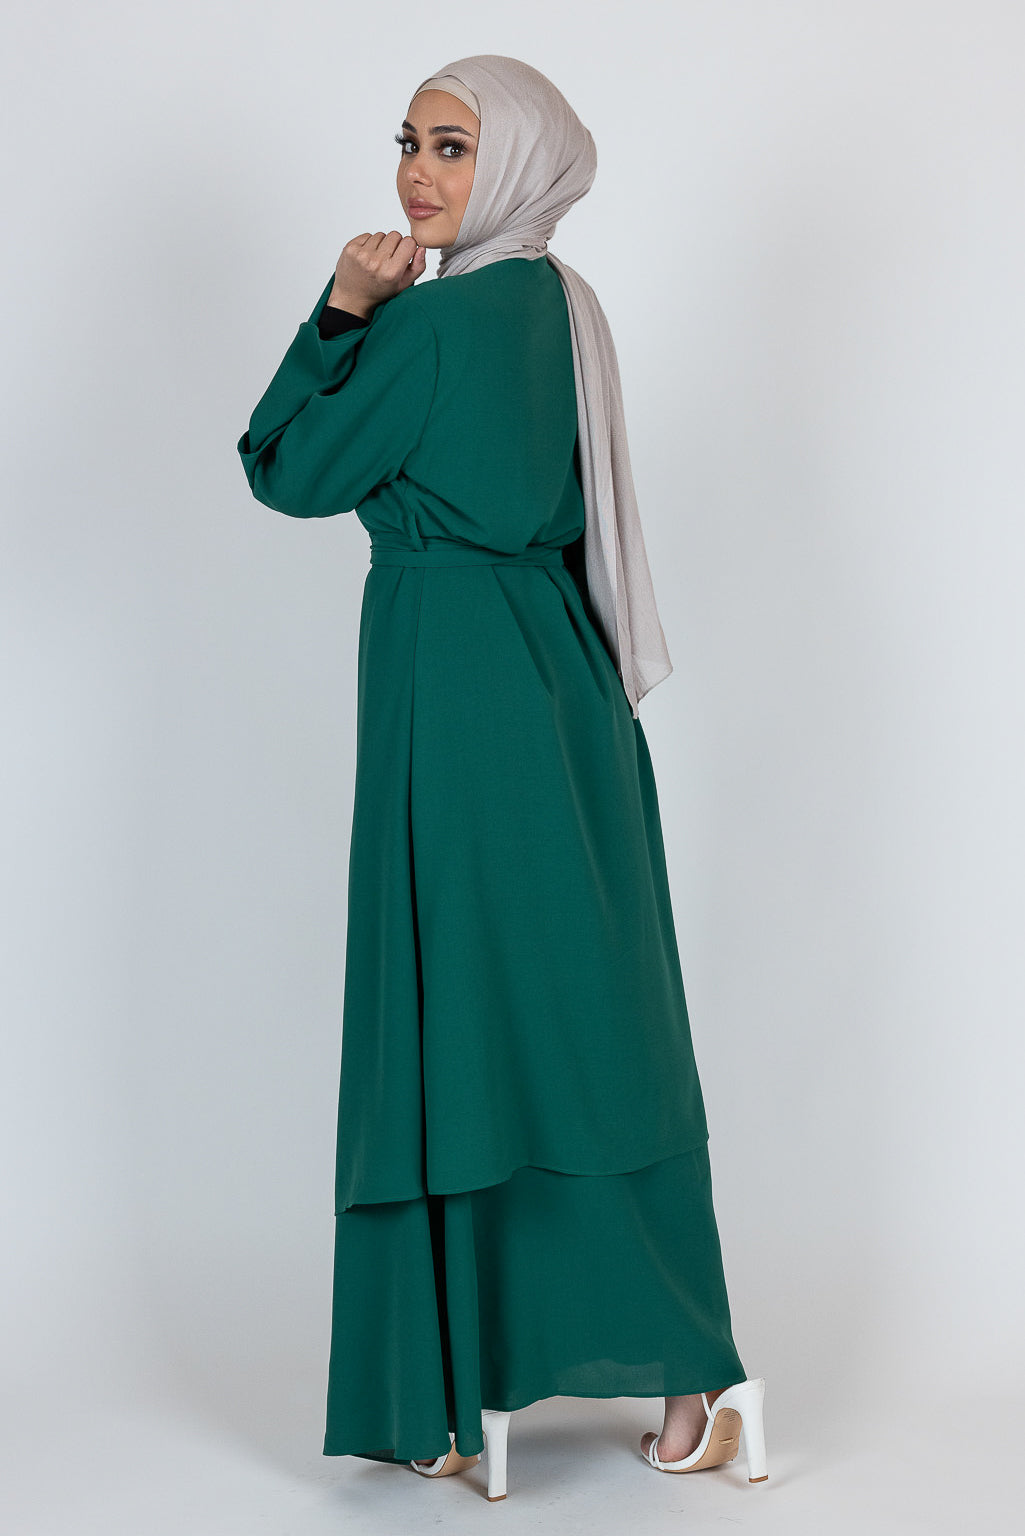 M8140Emeraldgreen-abaya-dress